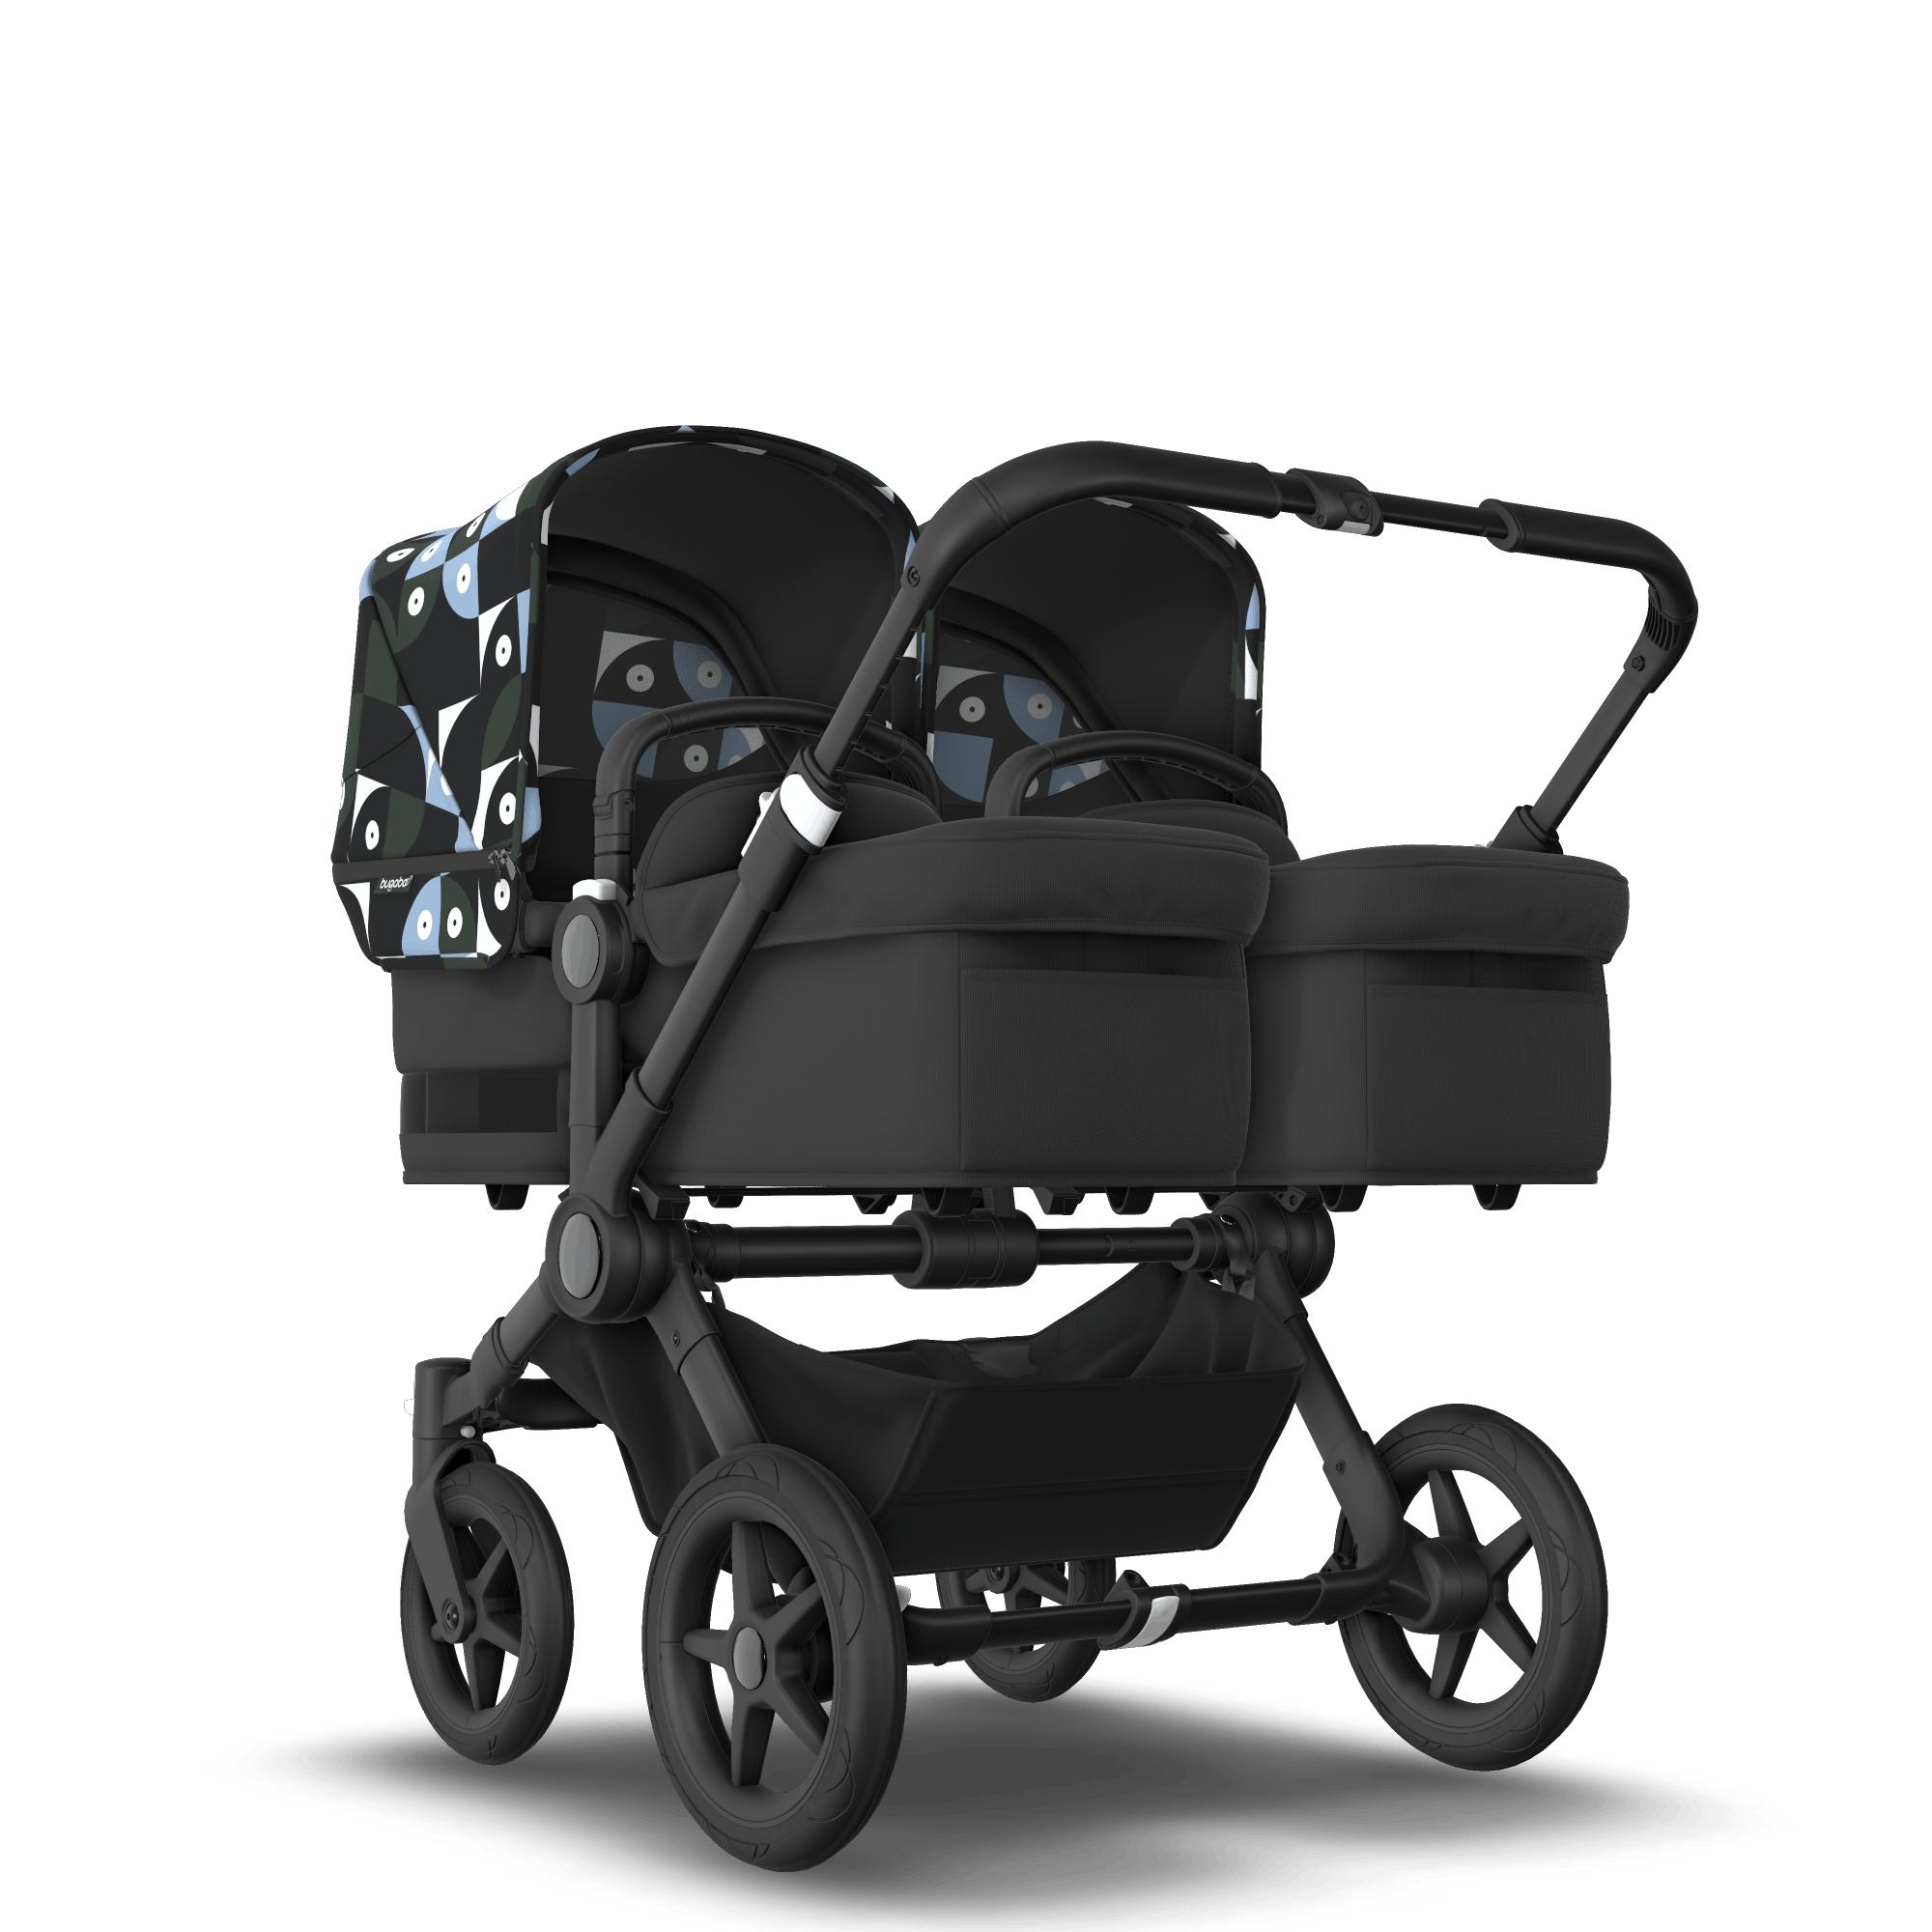 Bugaboo  Bugaboo Donkey 5 Twin bassinet and seat stroller black base midnight black fabrics animal explorer green/light blue sun canopy